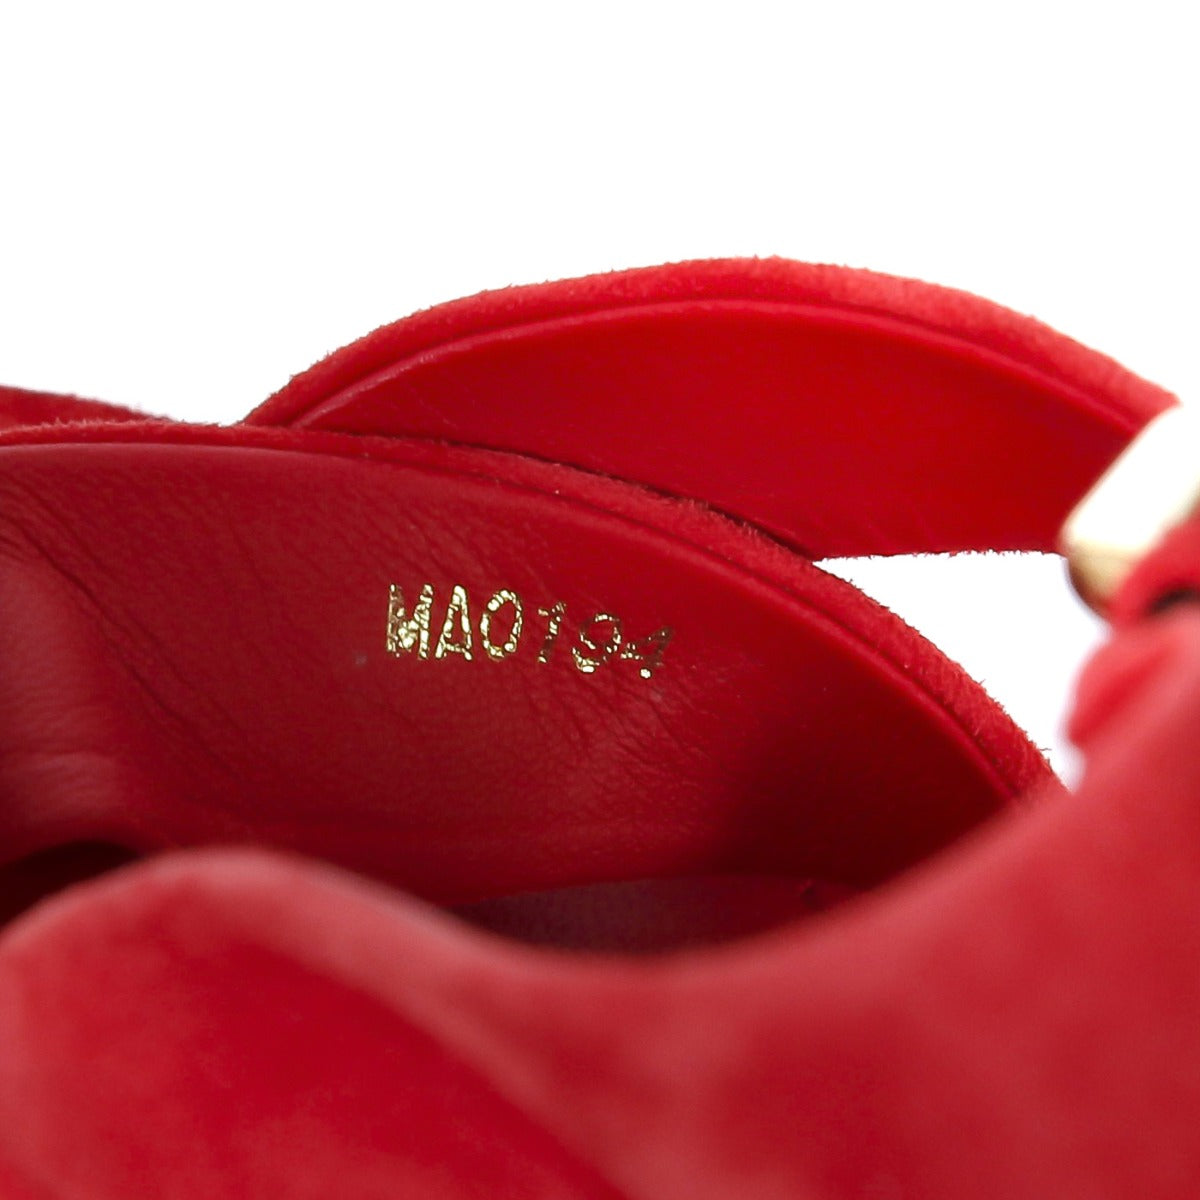 Cloth sandals Louis Vuitton Red size 38 EU in Cloth - 23093903